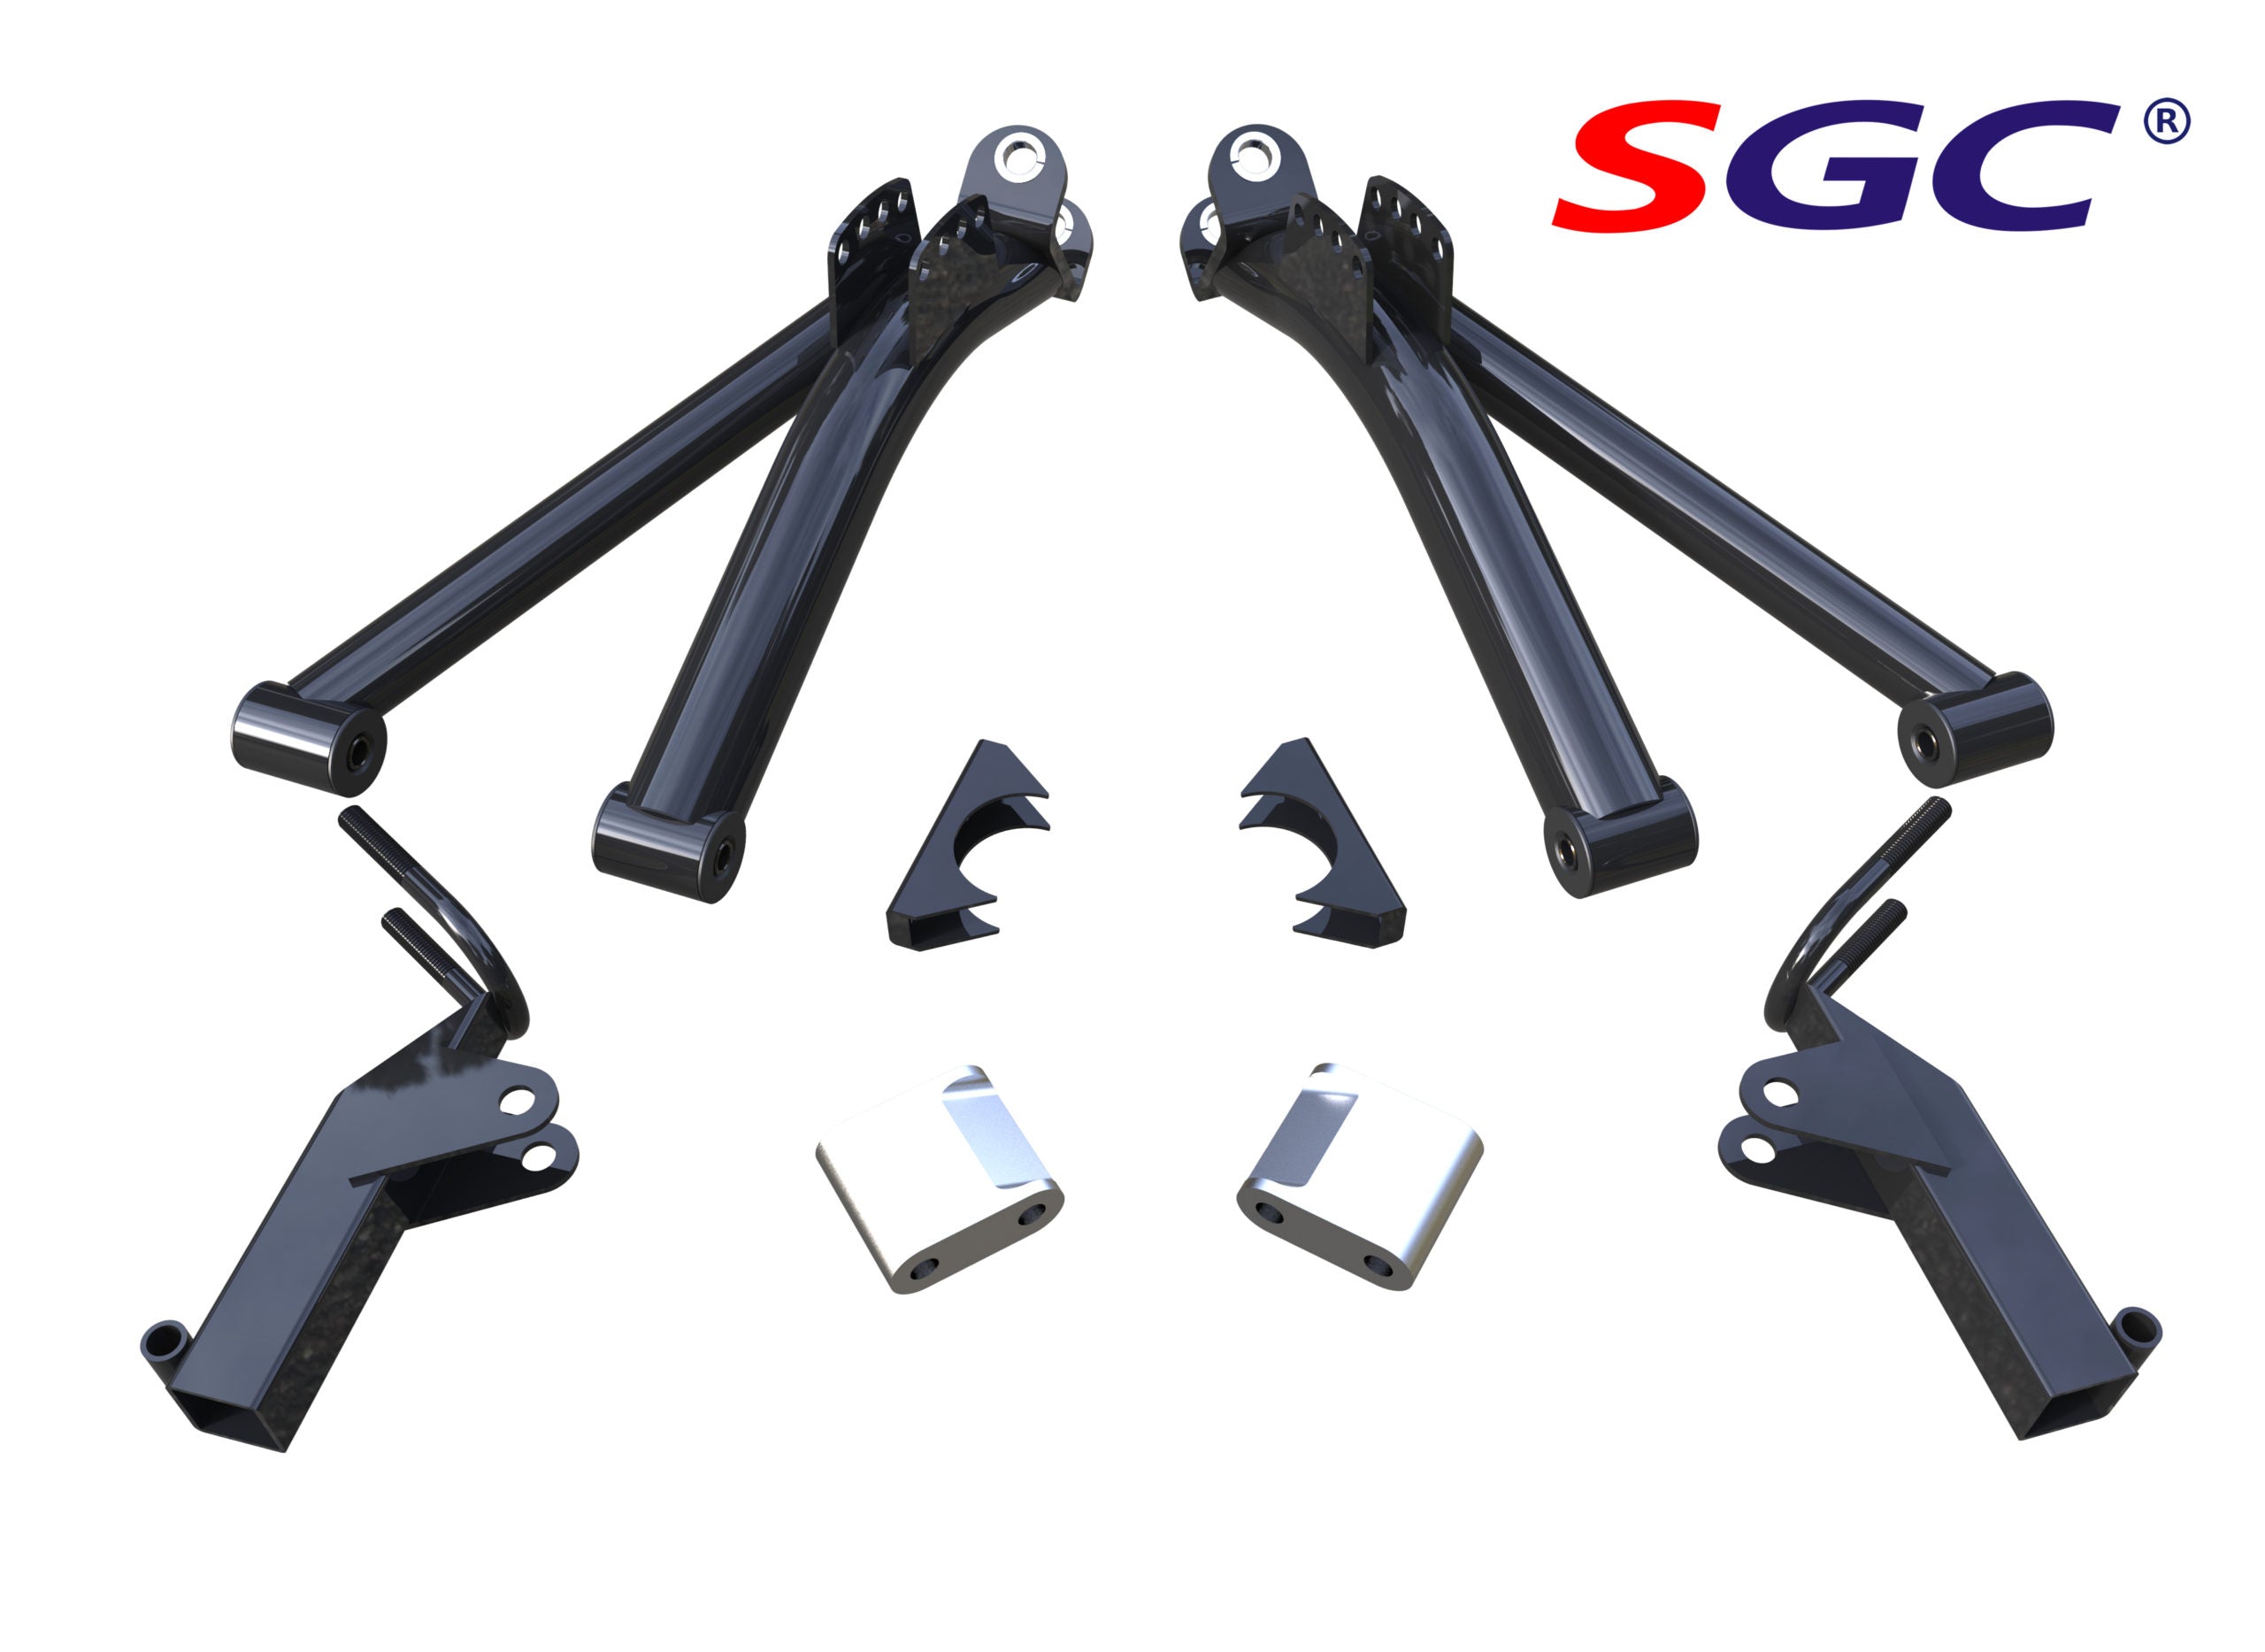 SGC 6'' A-ARM LIFT KIT FOR YAMAHA G2/G9 GOLF CART LKYM01